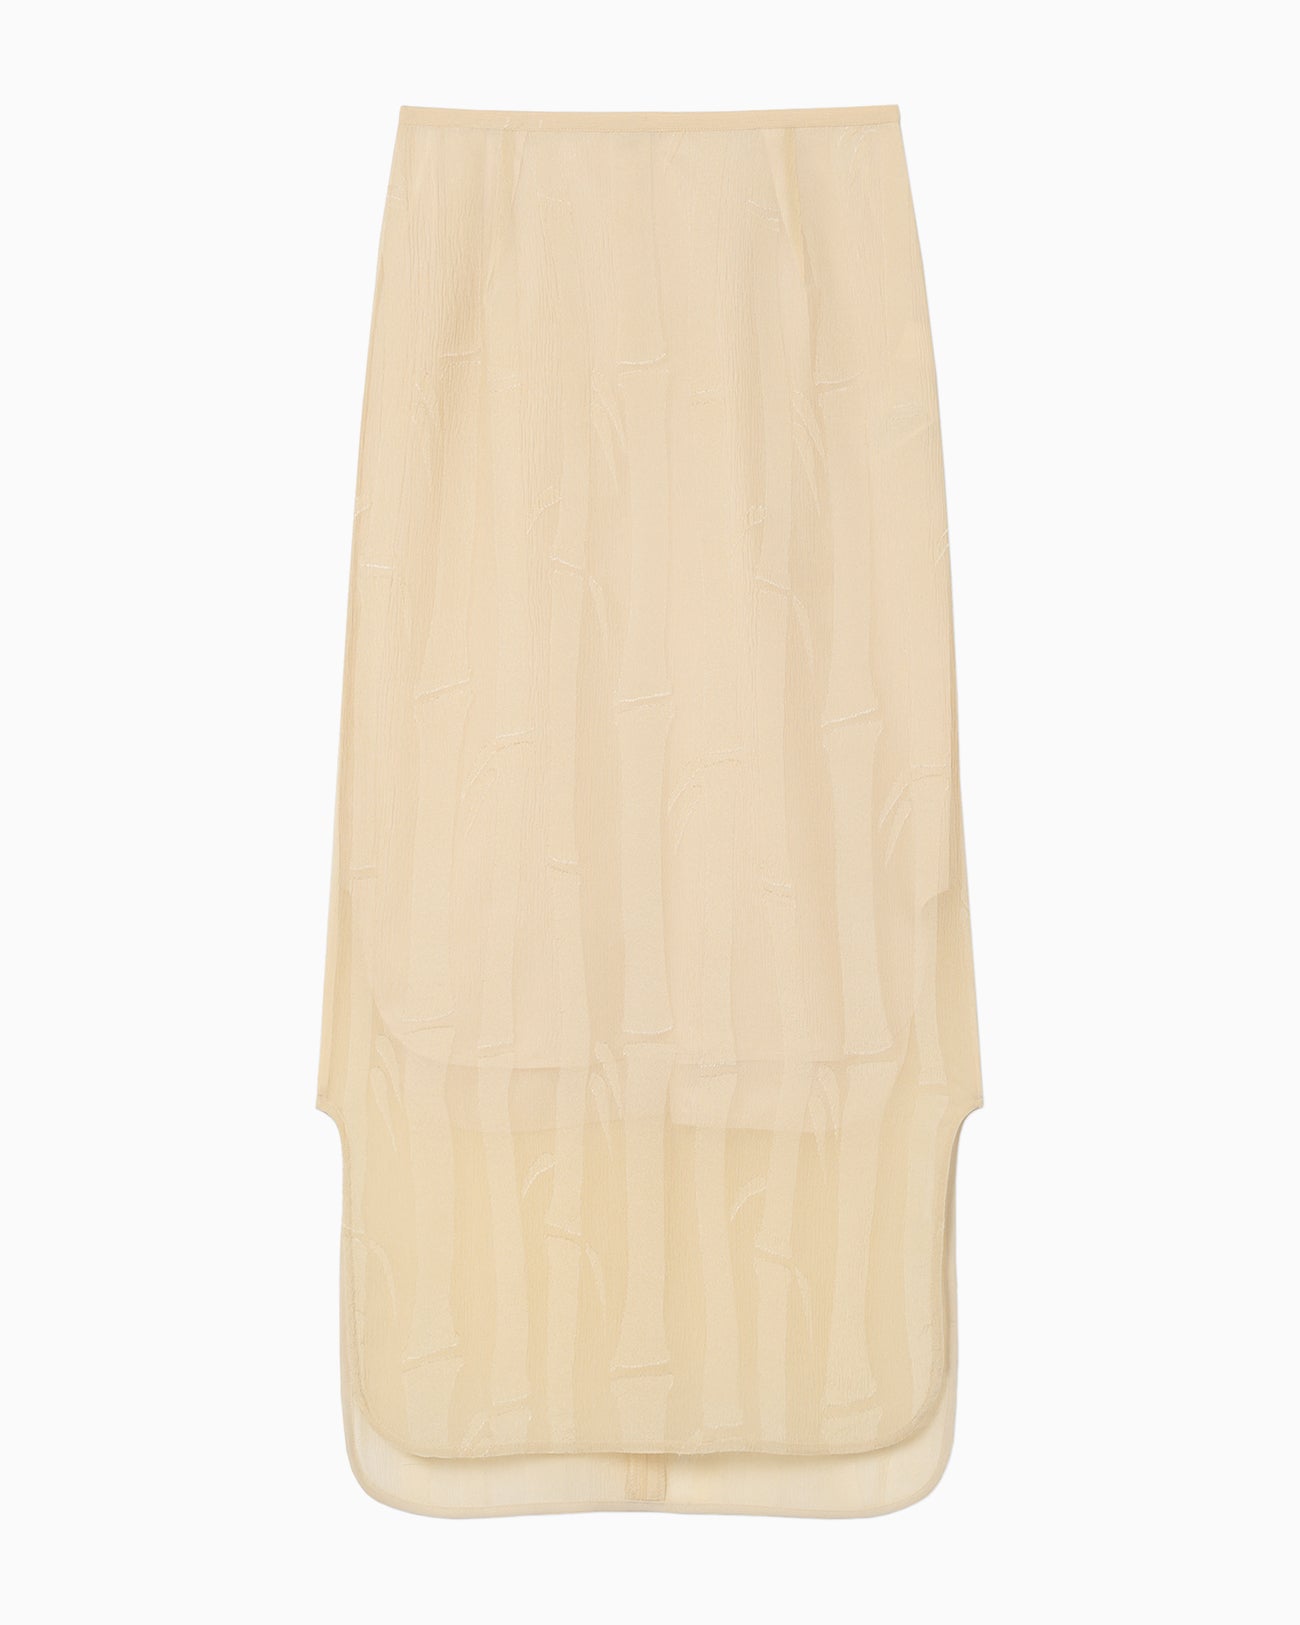 Bamboo Motif Willow Jacquard Sheer Skirt - beige